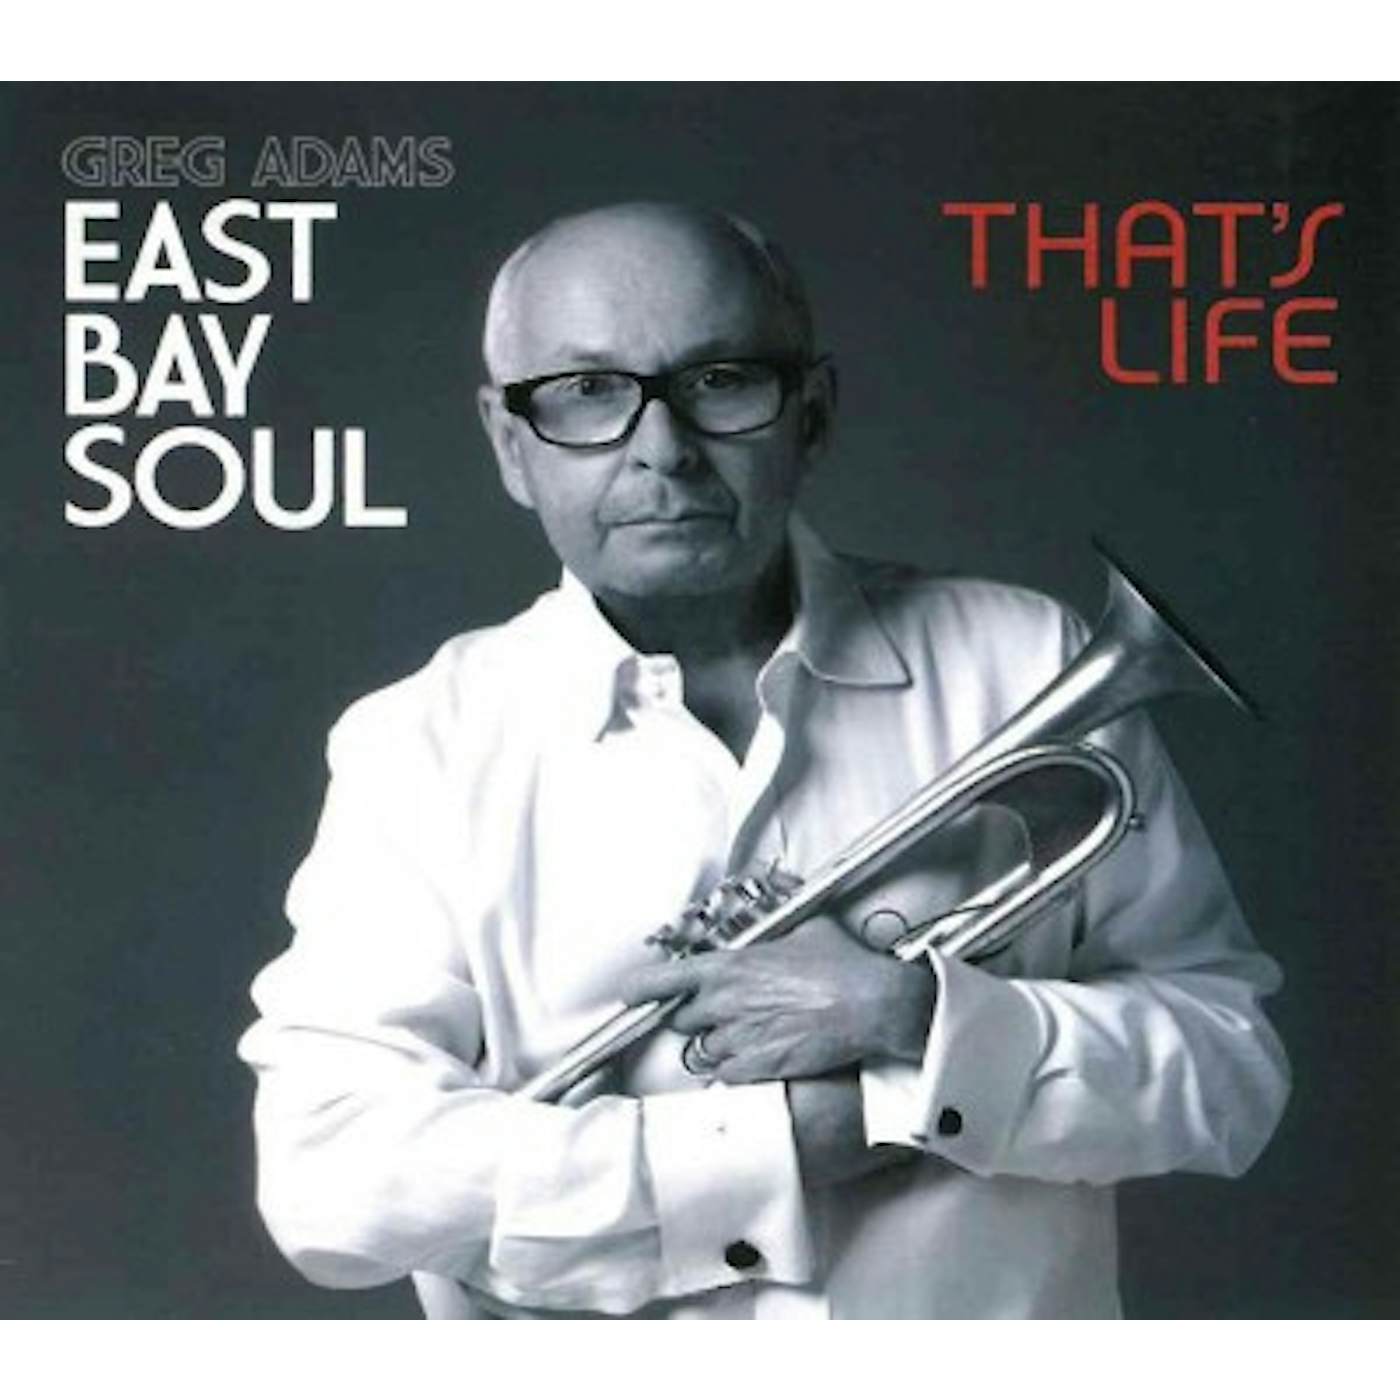 Greg Adams East Bay Soul/That's Life CD